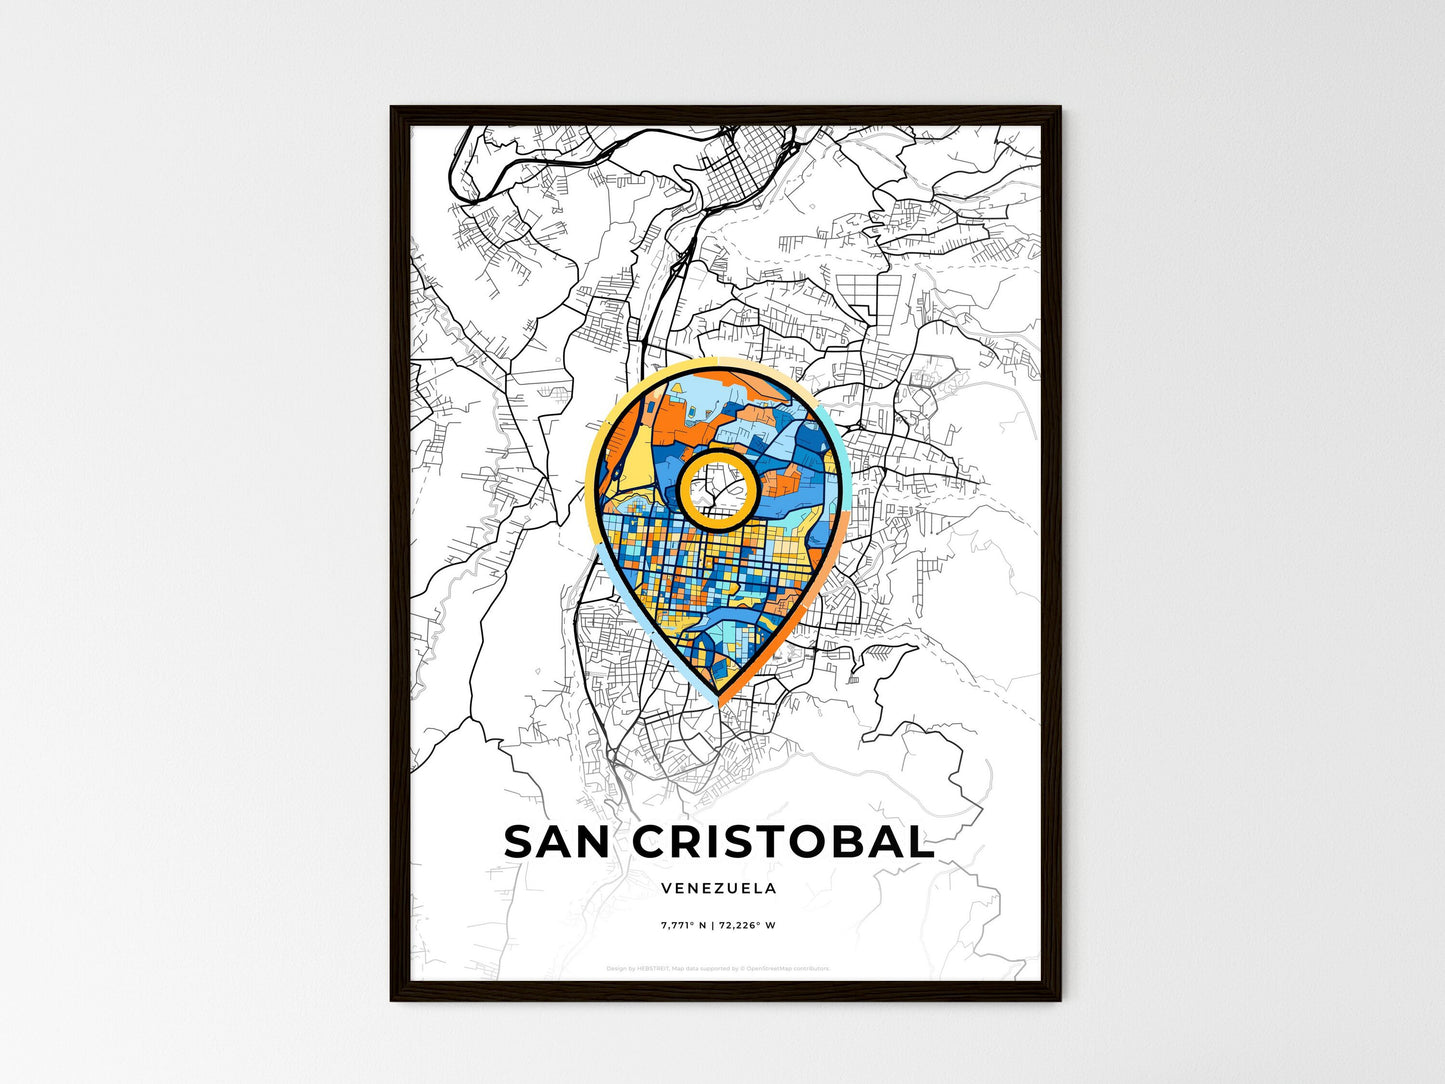 SAN CRISTOBAL VENEZUELA minimal art map with a colorful icon. Style 1